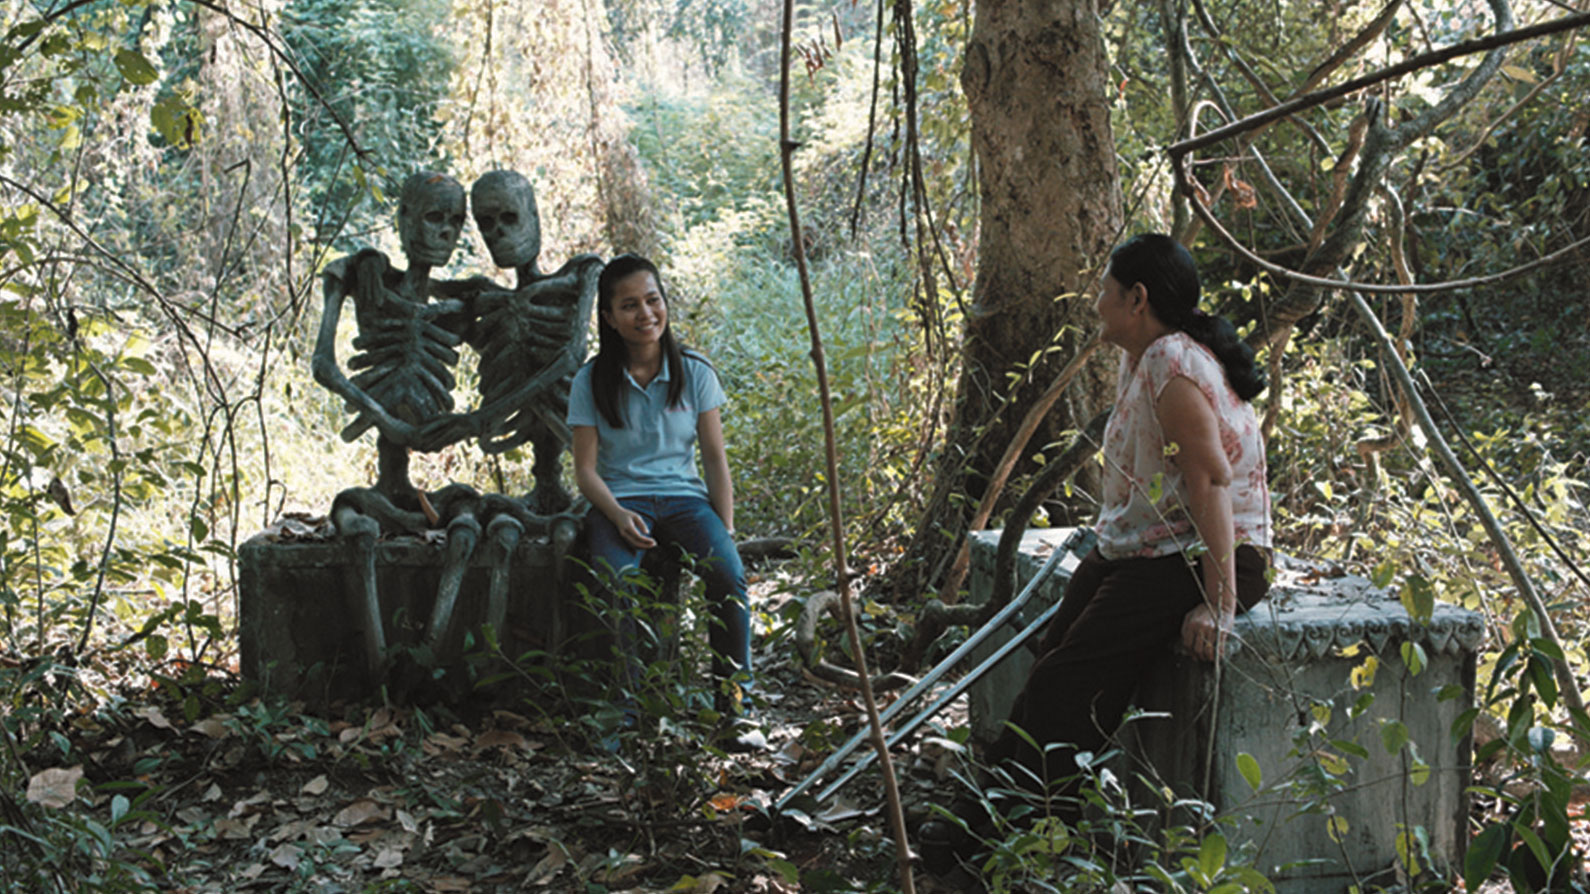 Jarinpattra Rueangram as Keng and Jenjira Pongpas as Jen in Apichatpong Weerasethakul’s Cemetery of Splendor, 2015